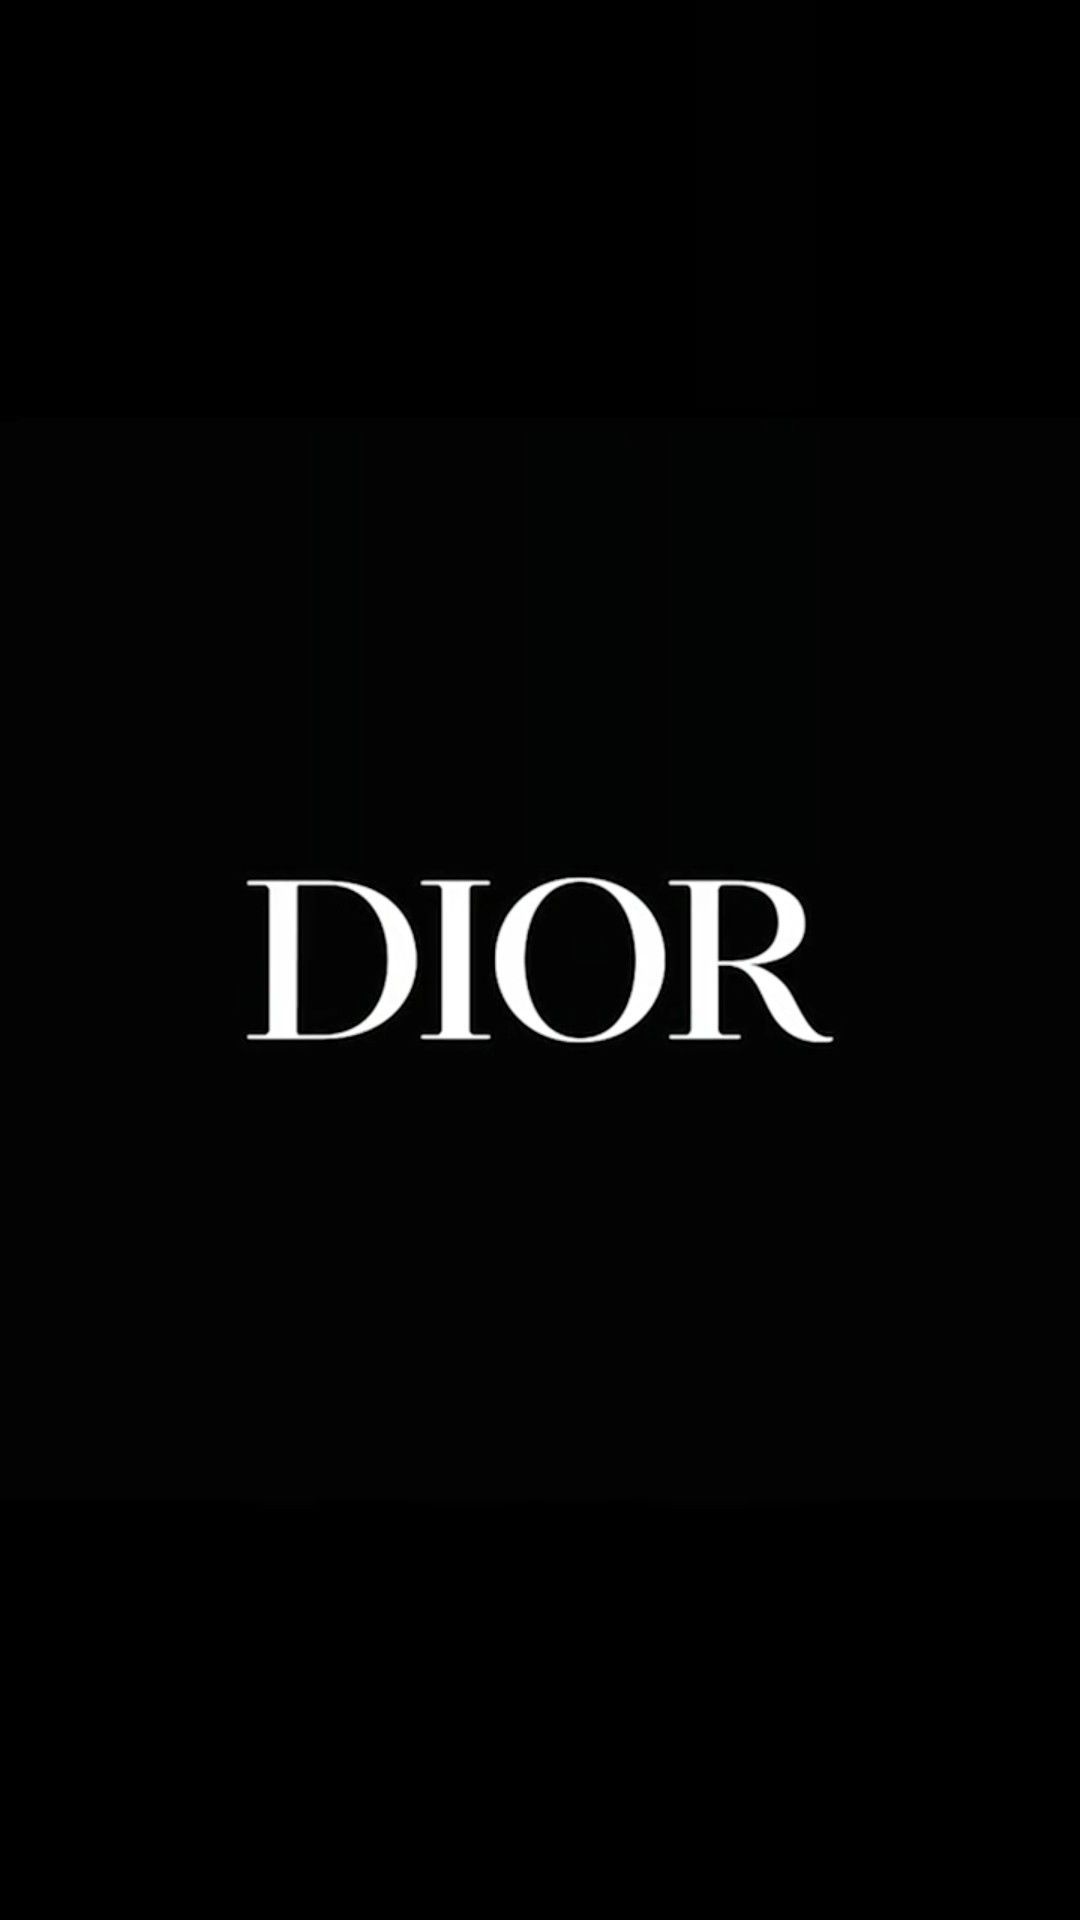 Dior Wallpapers On Wallpaperdog